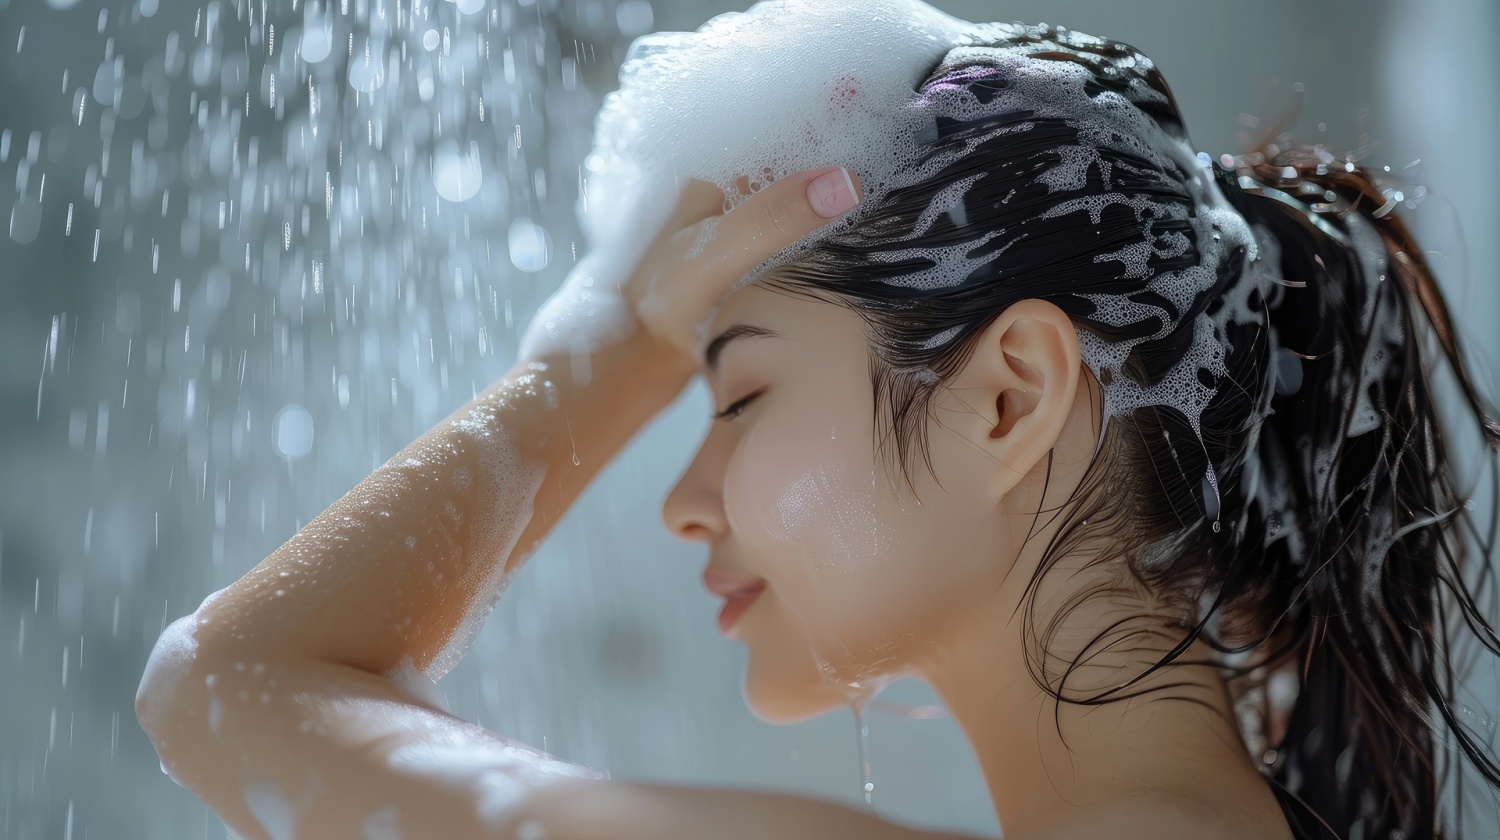 Shampoo Bars vs. Liquid Shampoo: Pros and Cons